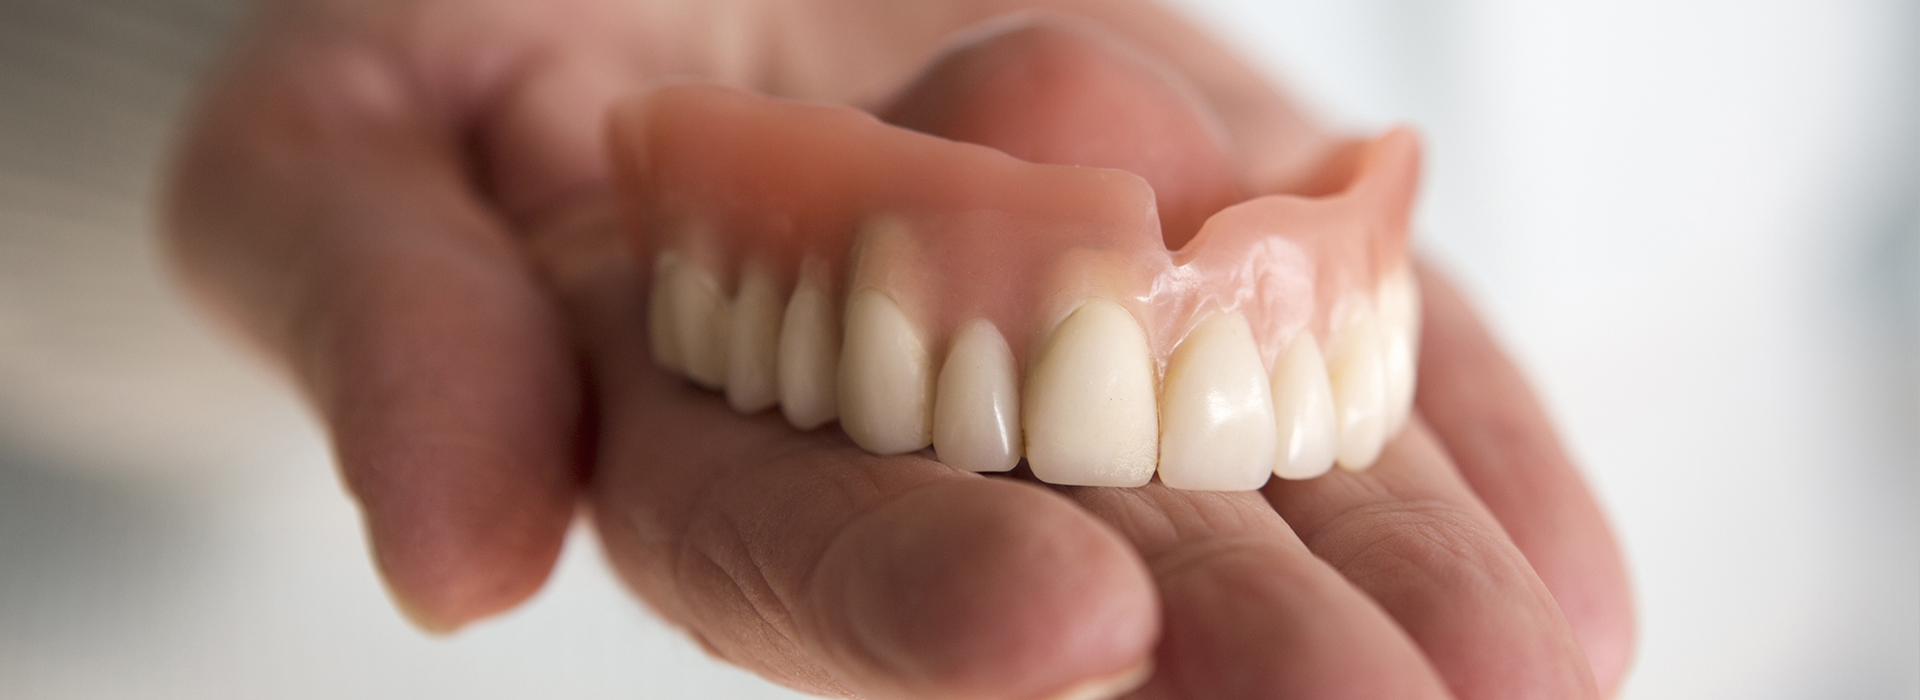 Bethesda Rock Dental | Preventative Program, Simple Extractions and Ceramic Crowns